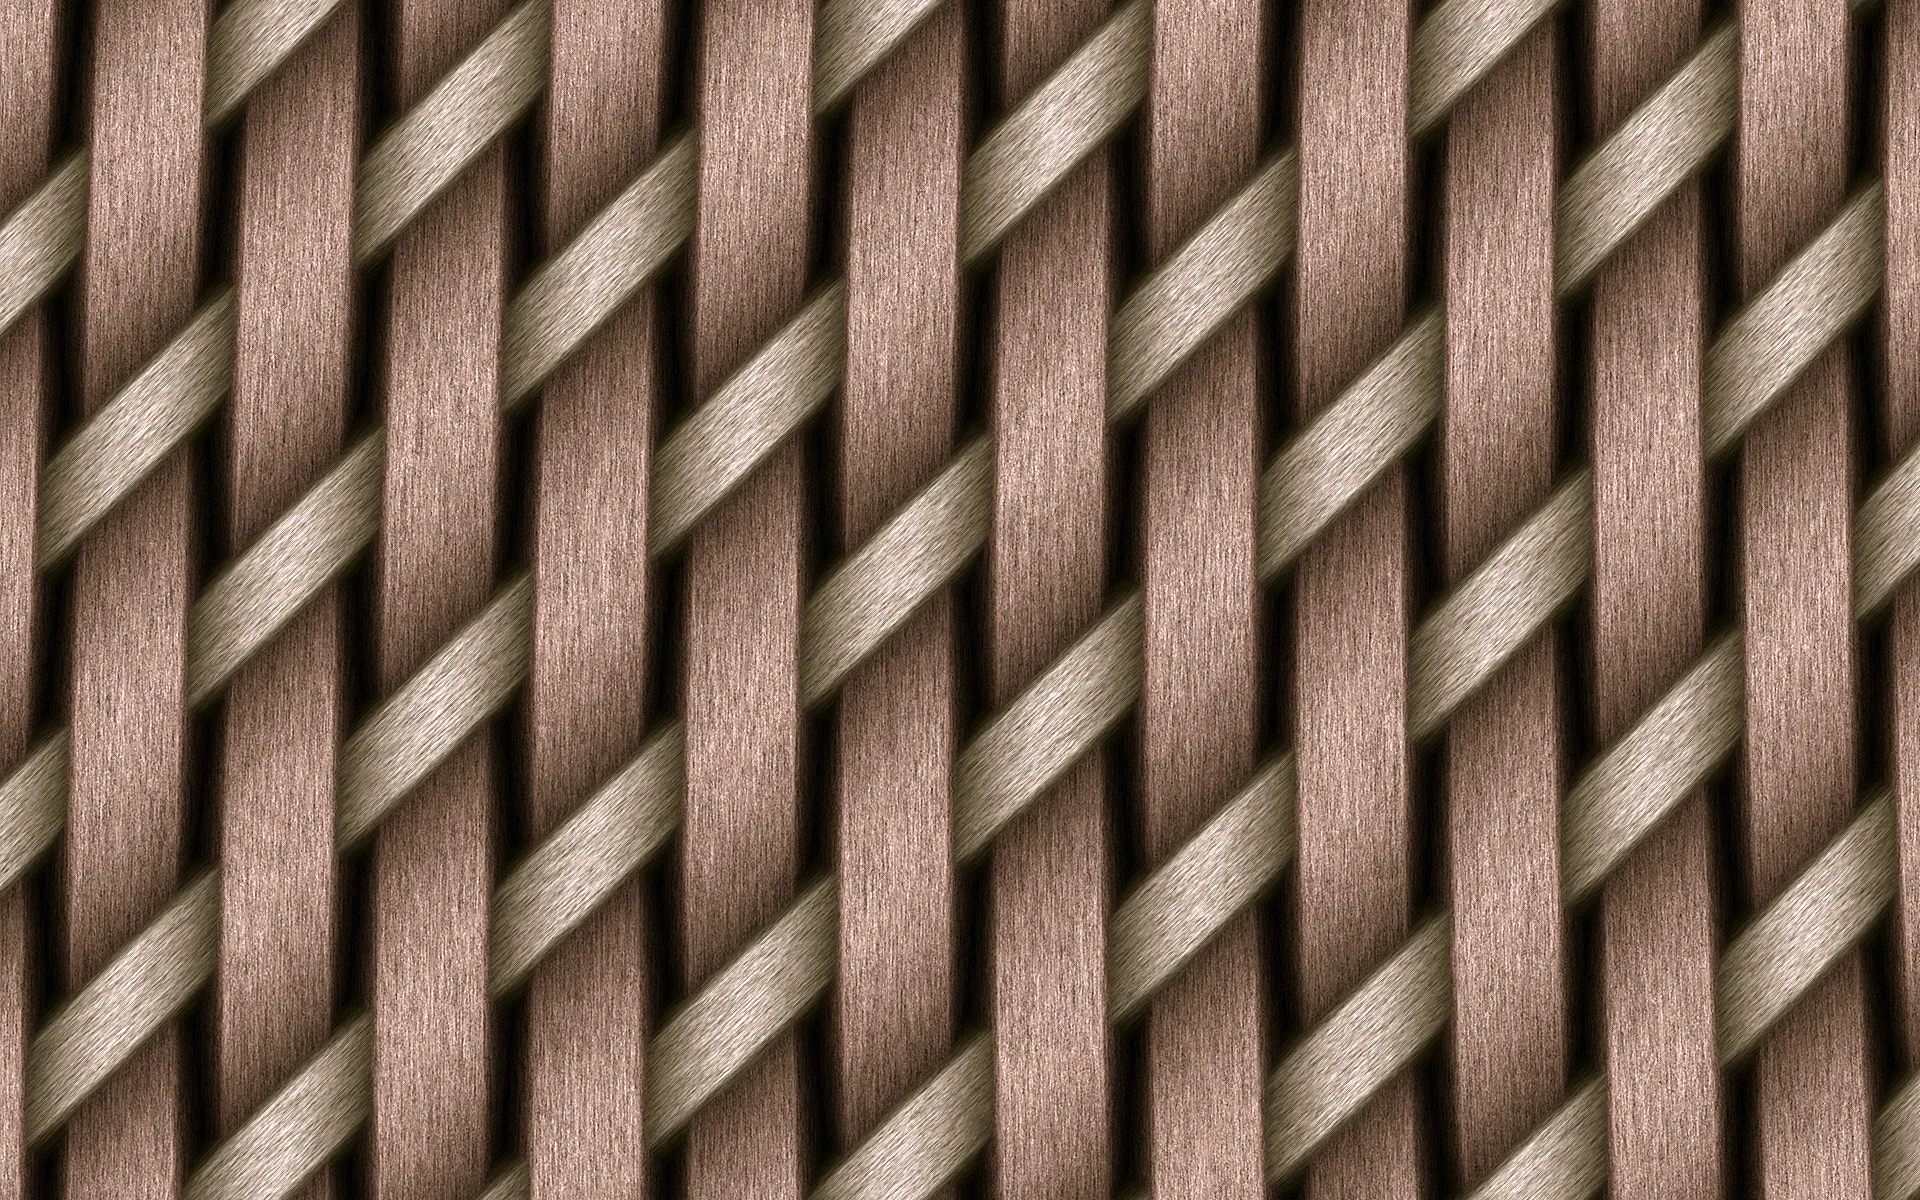 Rattan Wood Texture Wallpaper